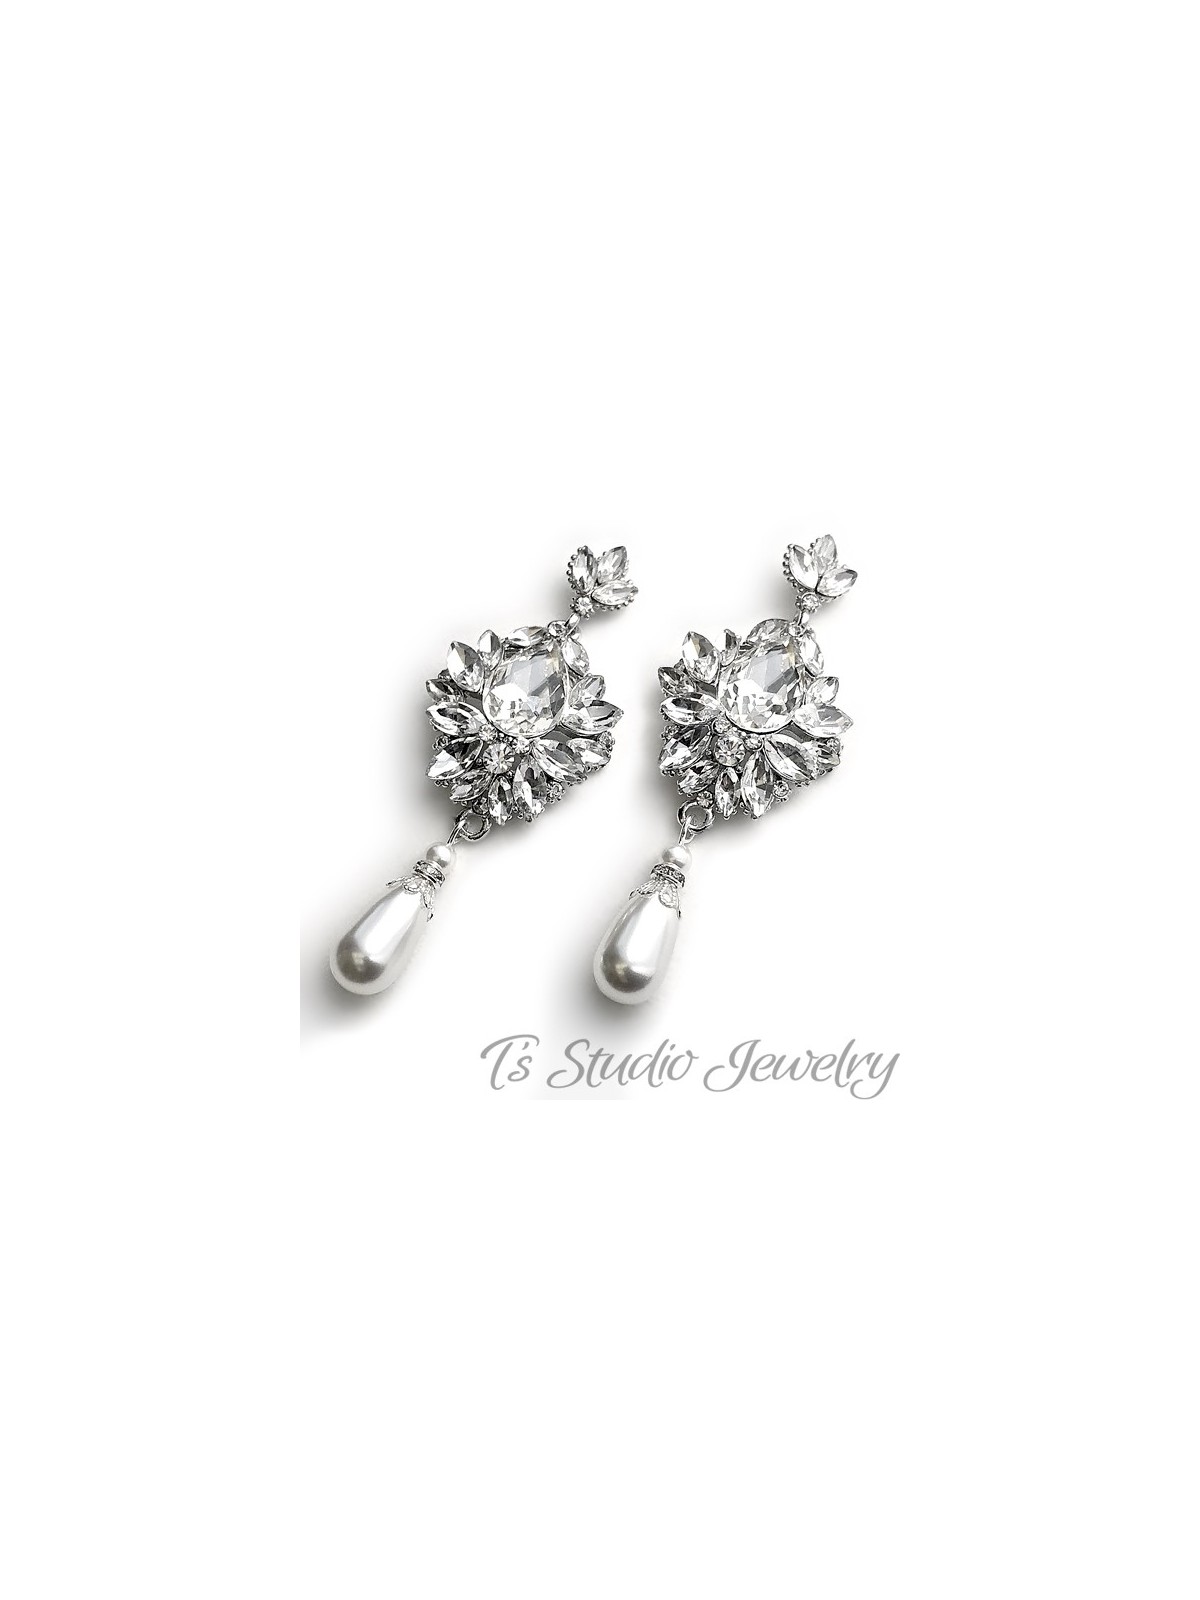 Vintage Pearl Bridal Chandelier Earrings Great Gatsby Style Earings